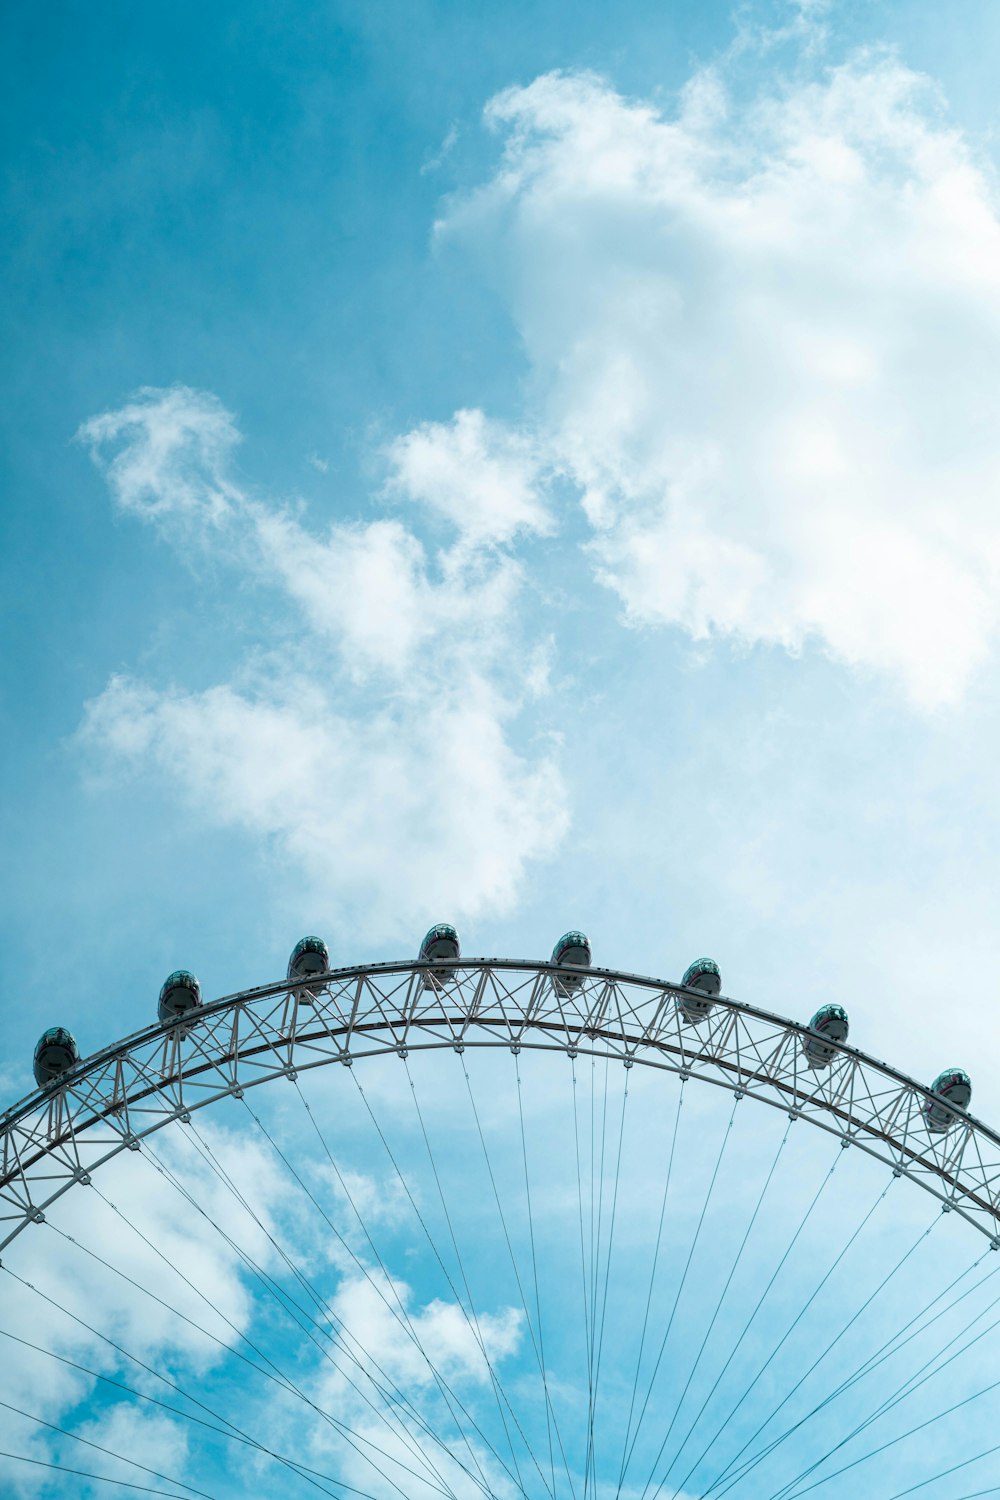 a large ferris wheel sitting under a cloudy blue sky